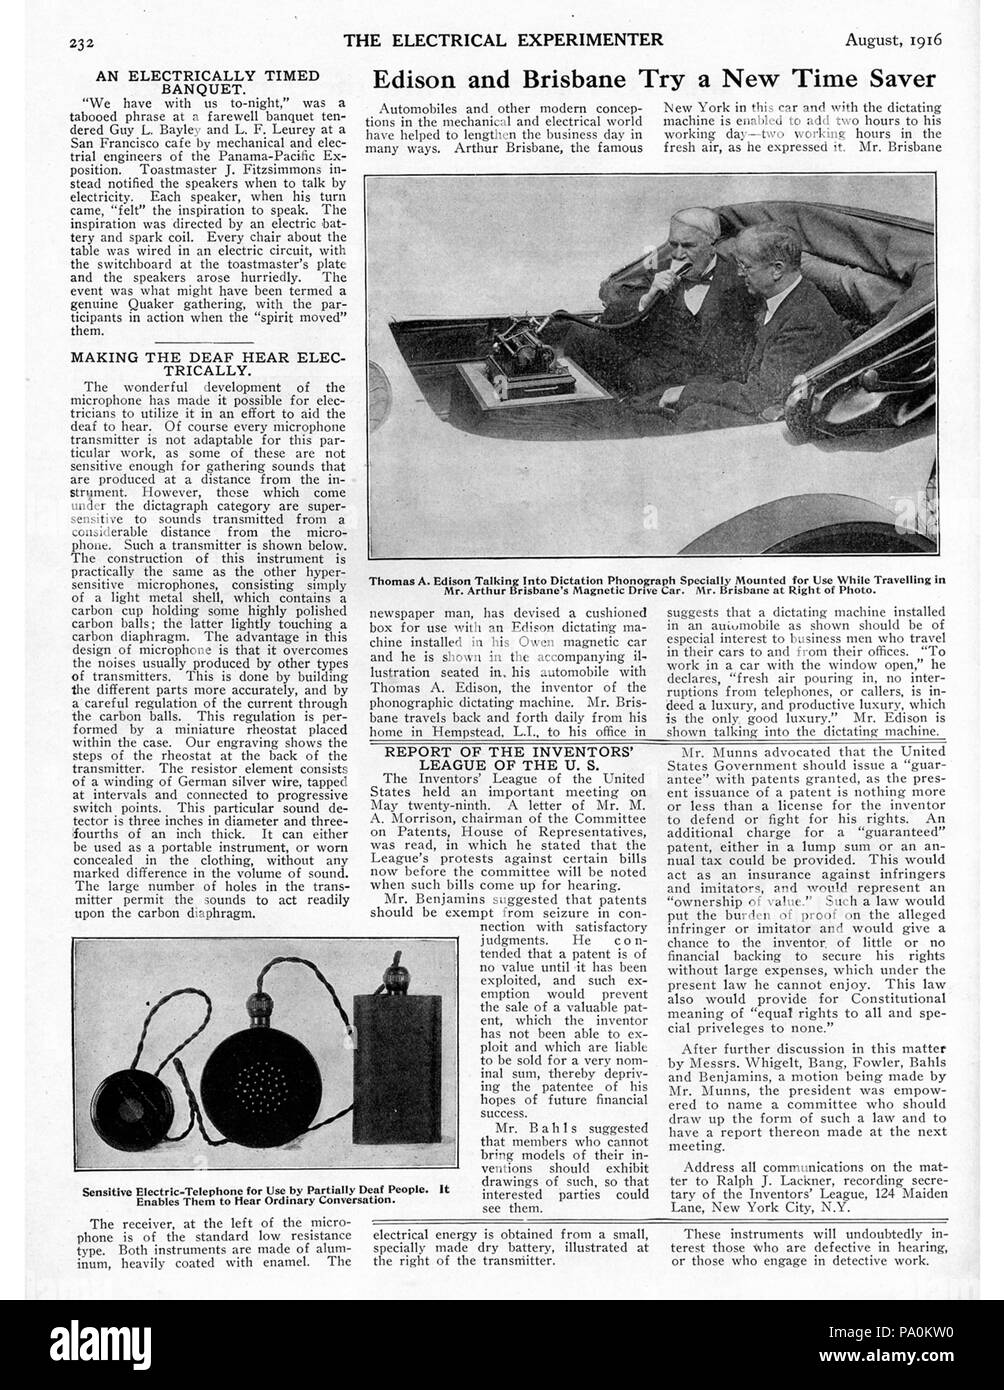 613 Electrical Experimenter Aug 1916 pg232 Stock Photo